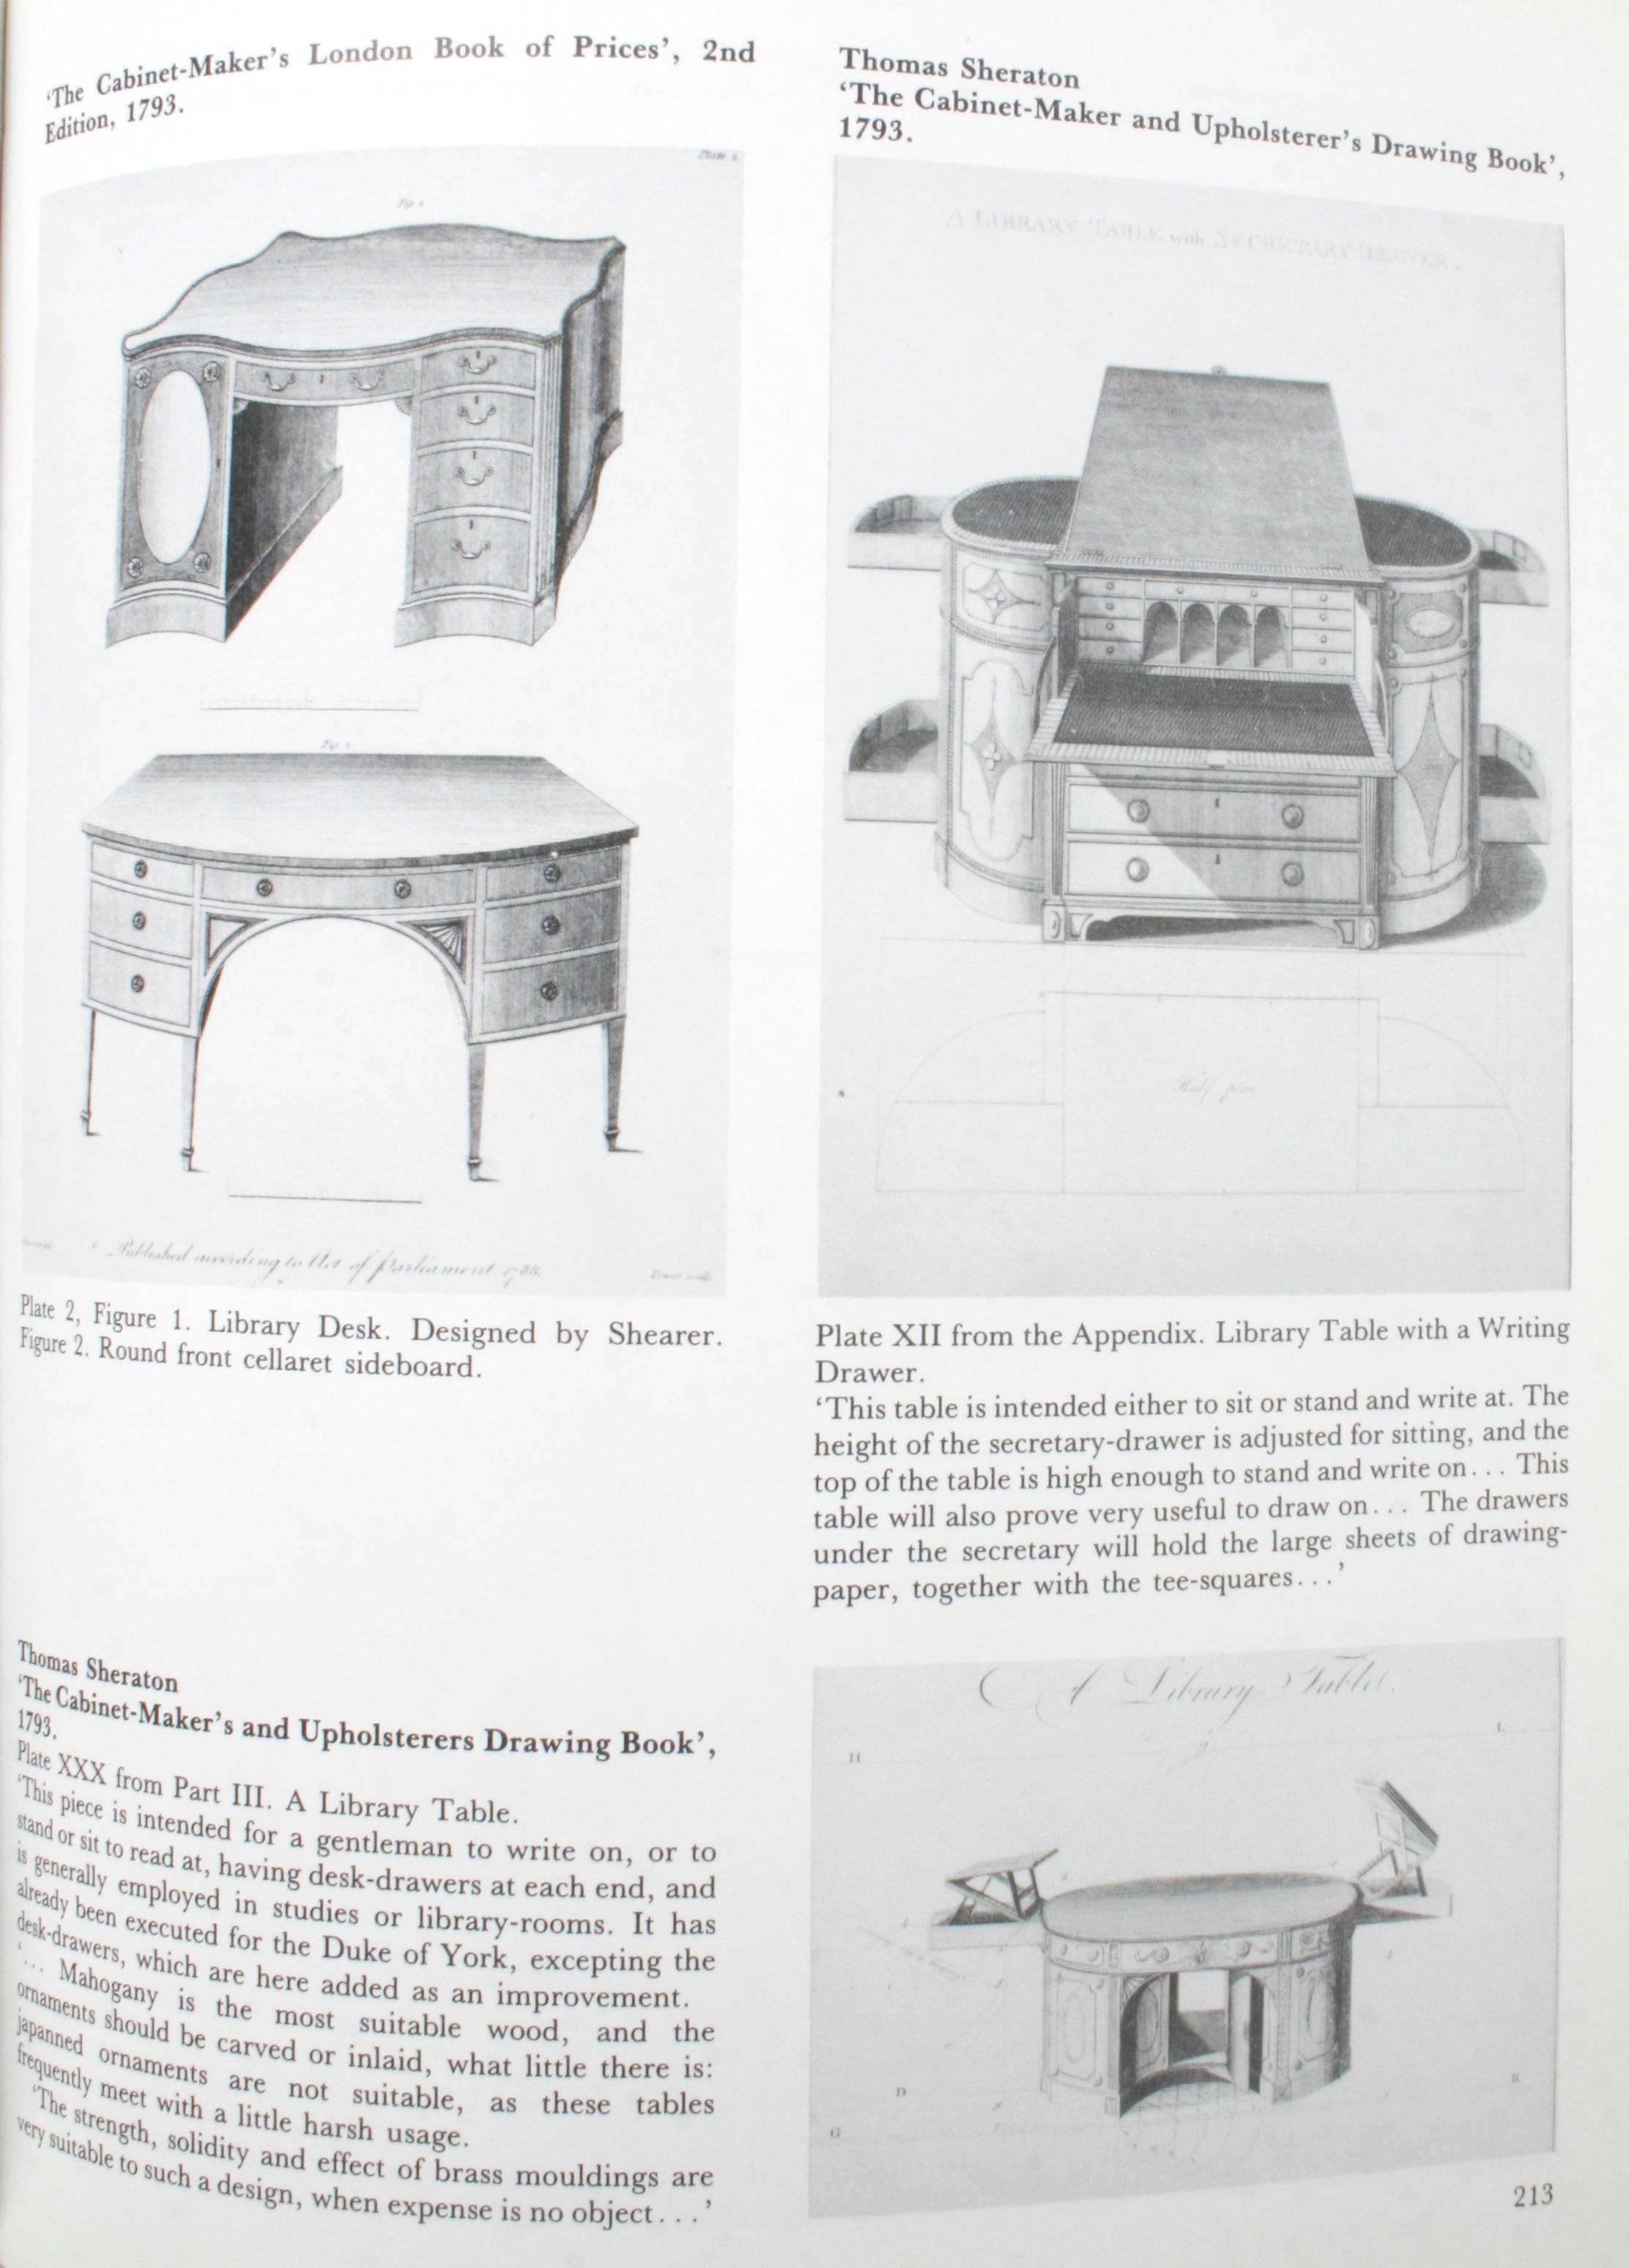 English Pictorial Dictionary of British 18th Century Furniture Design